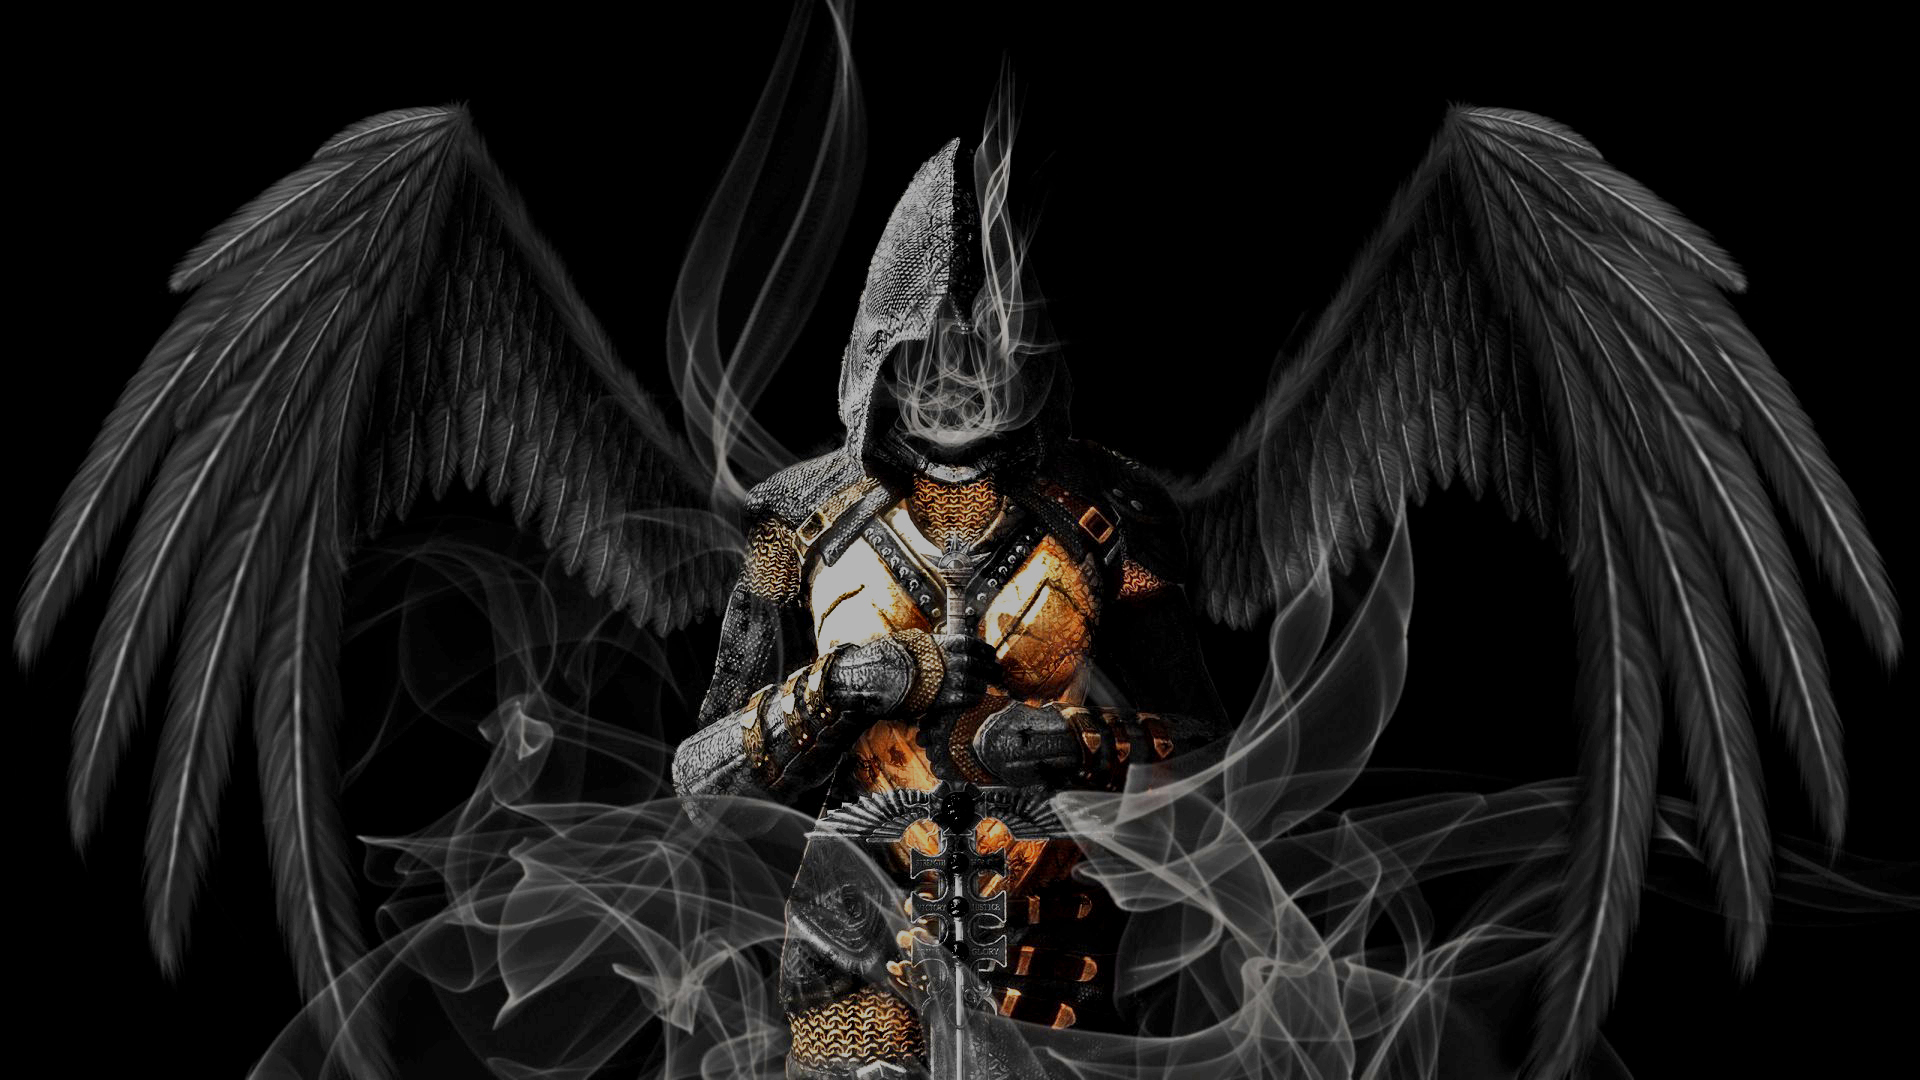 warrior wallpaper hd,fictional character,demon,darkness,illustration,cg artwork